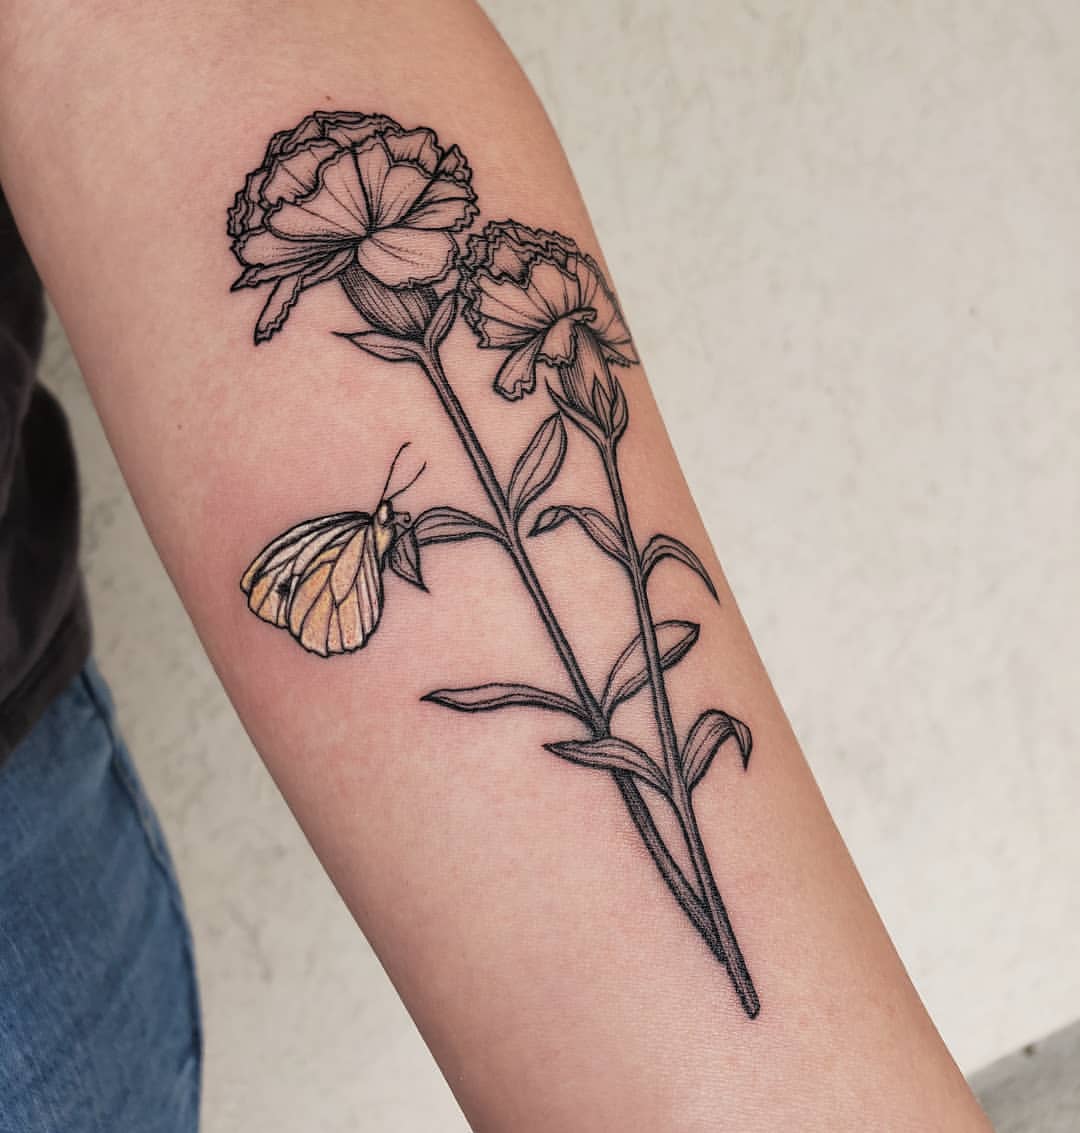 Simply Inked Lotus Flower Temporary Tattoo, Designer Tattoo for Girls Boys  Men Women waterproof Sticker Size: 2.5 X 4 inch 1pc. l Black l 2g :  Amazon.in: Beauty